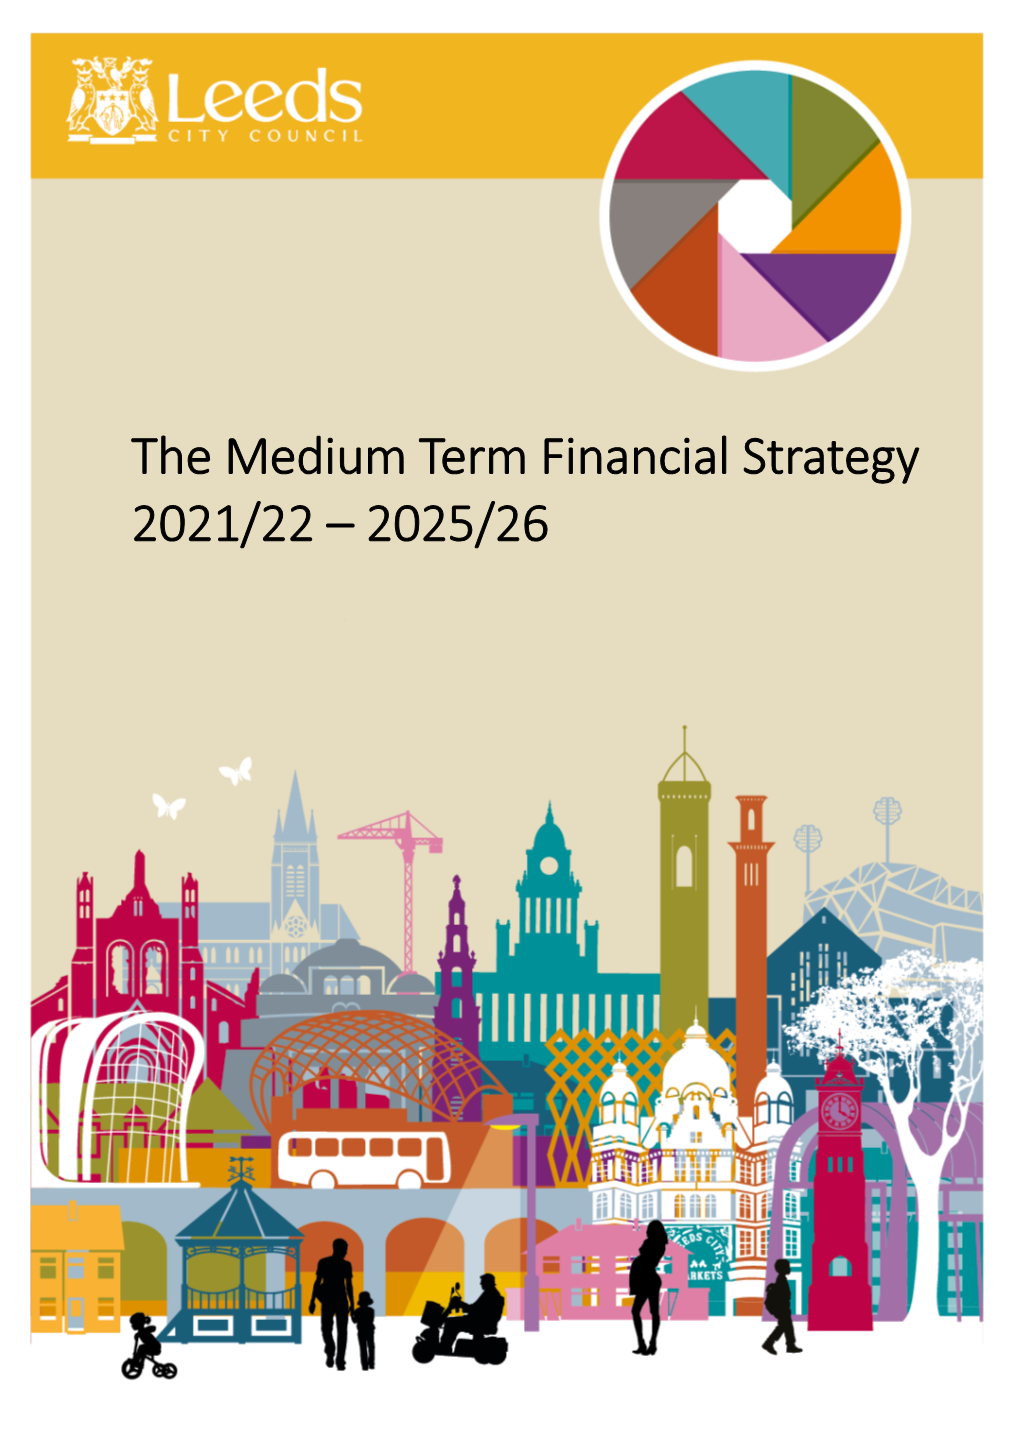 The Medium Term Financial Strategy 2021/22 -2025/26